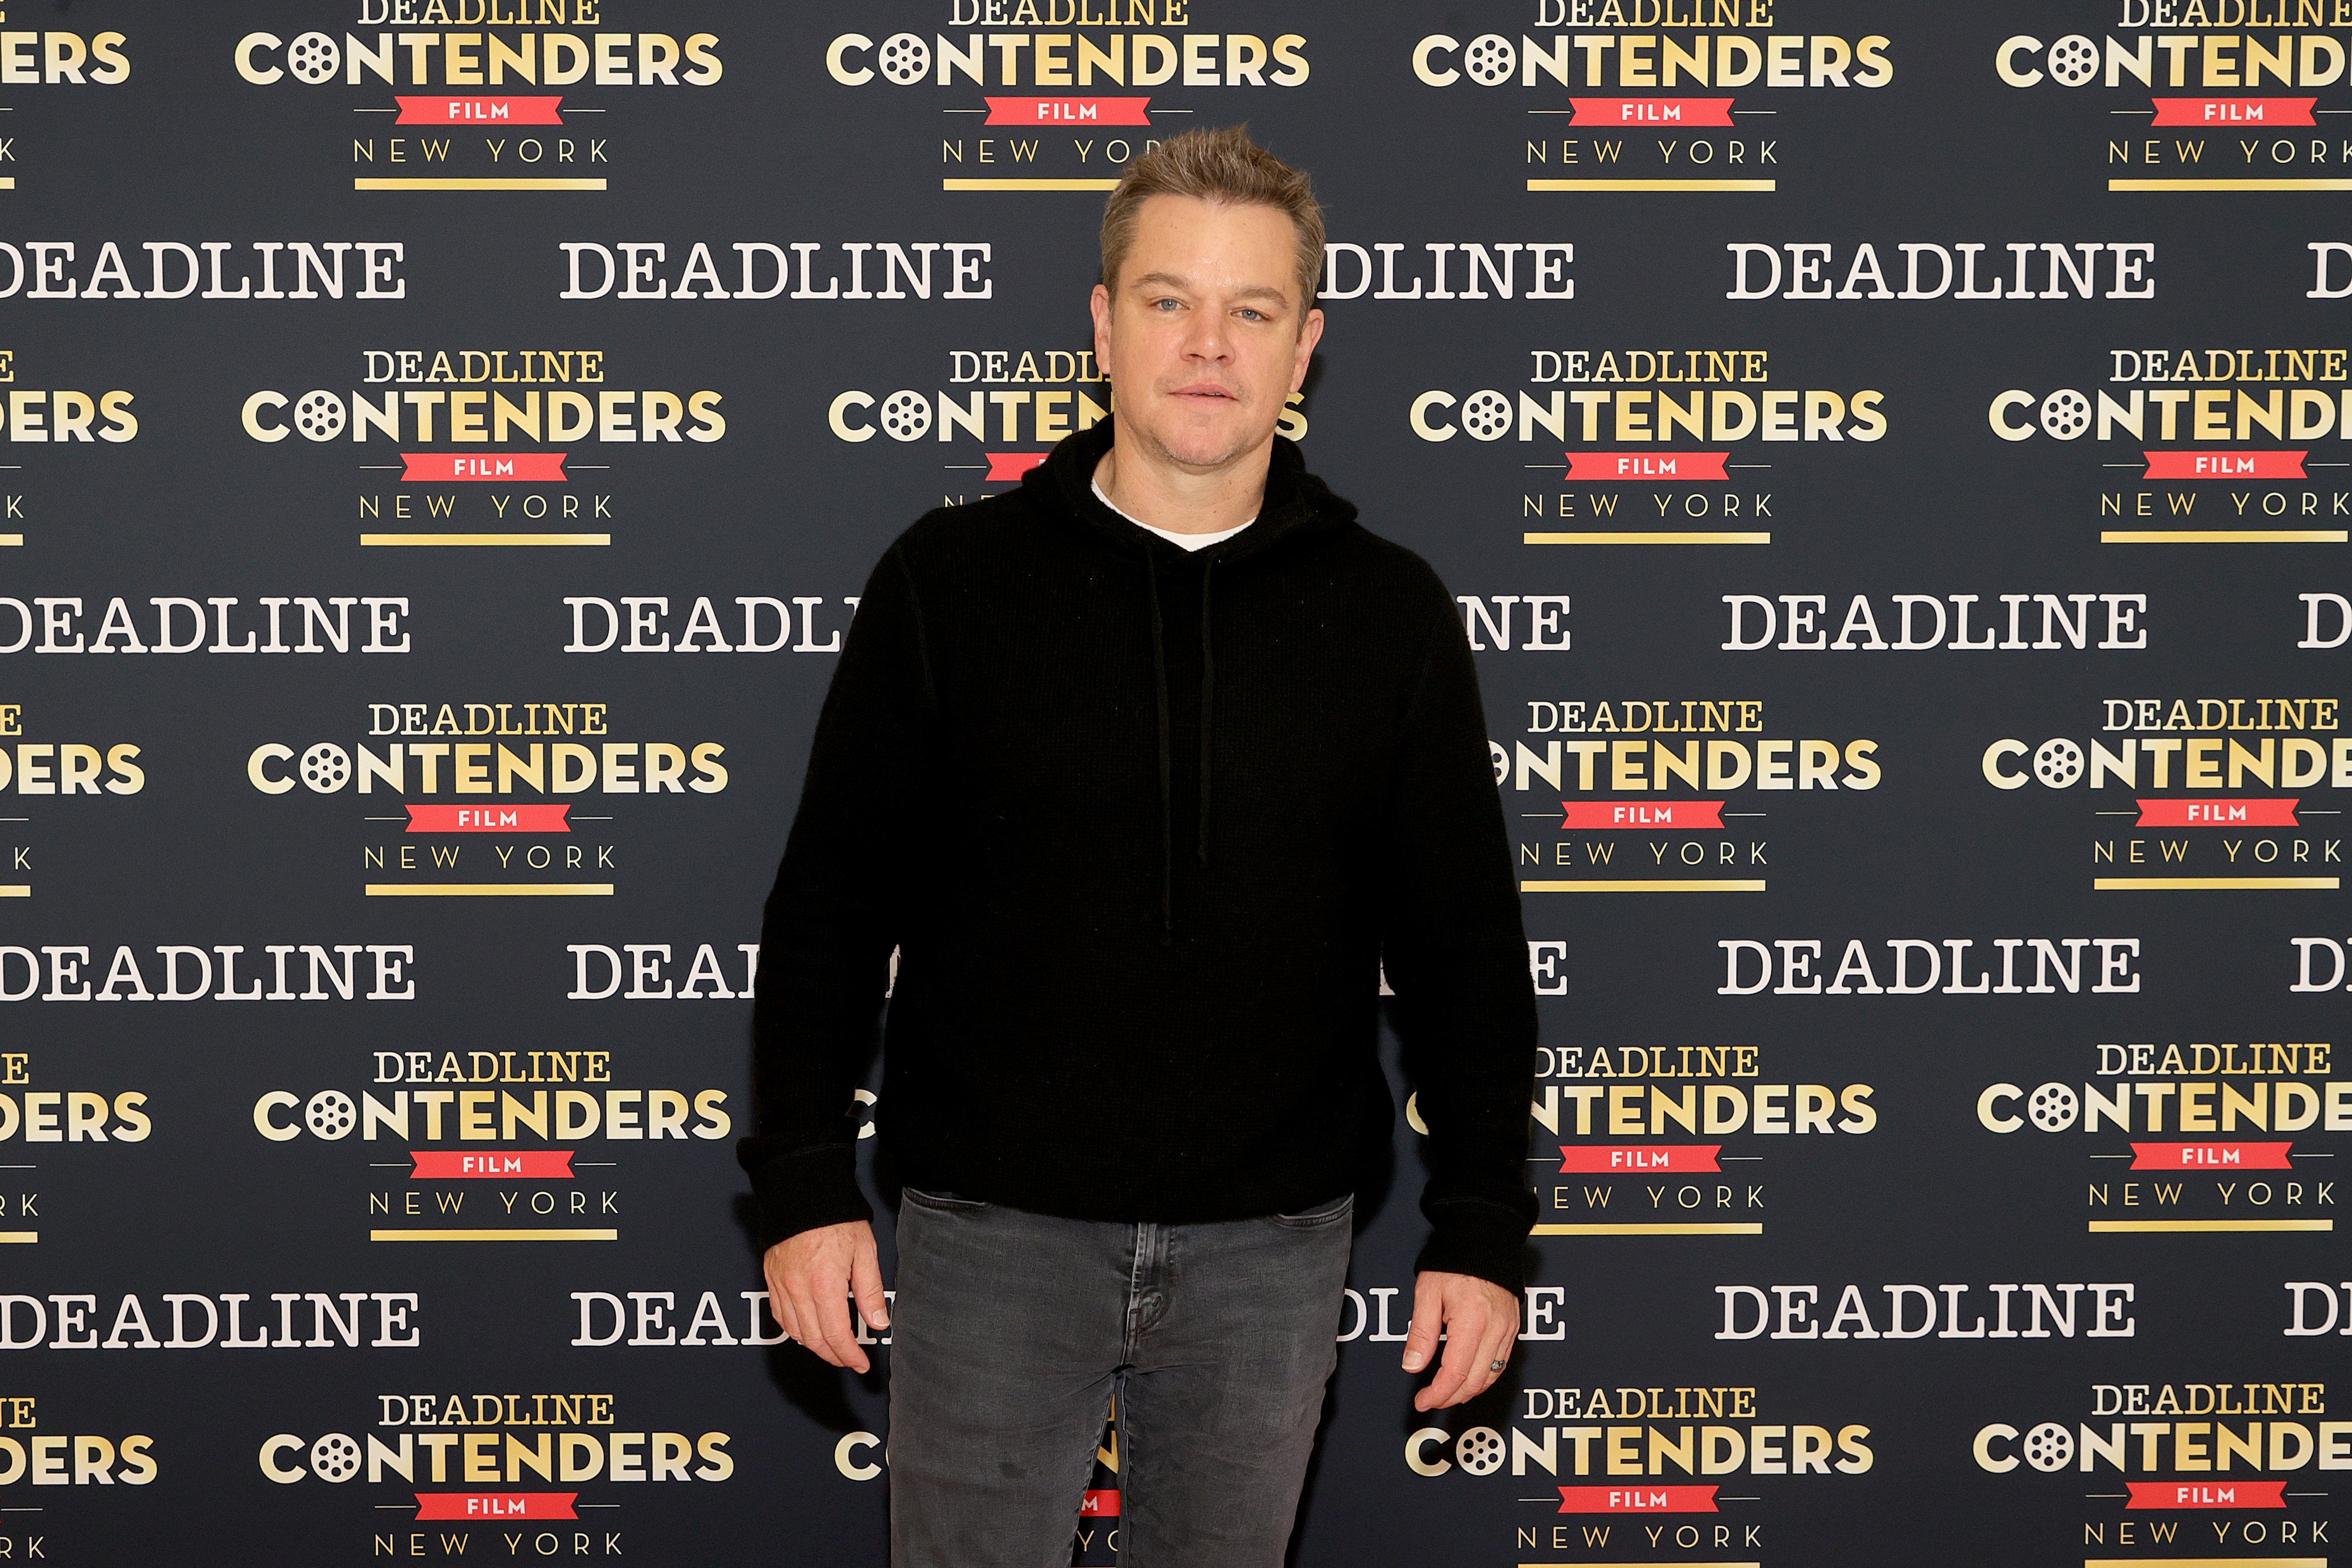 Matt Damon at the Deadline Contenders Film in New York on December 4, 2021 | Source: Getty Images